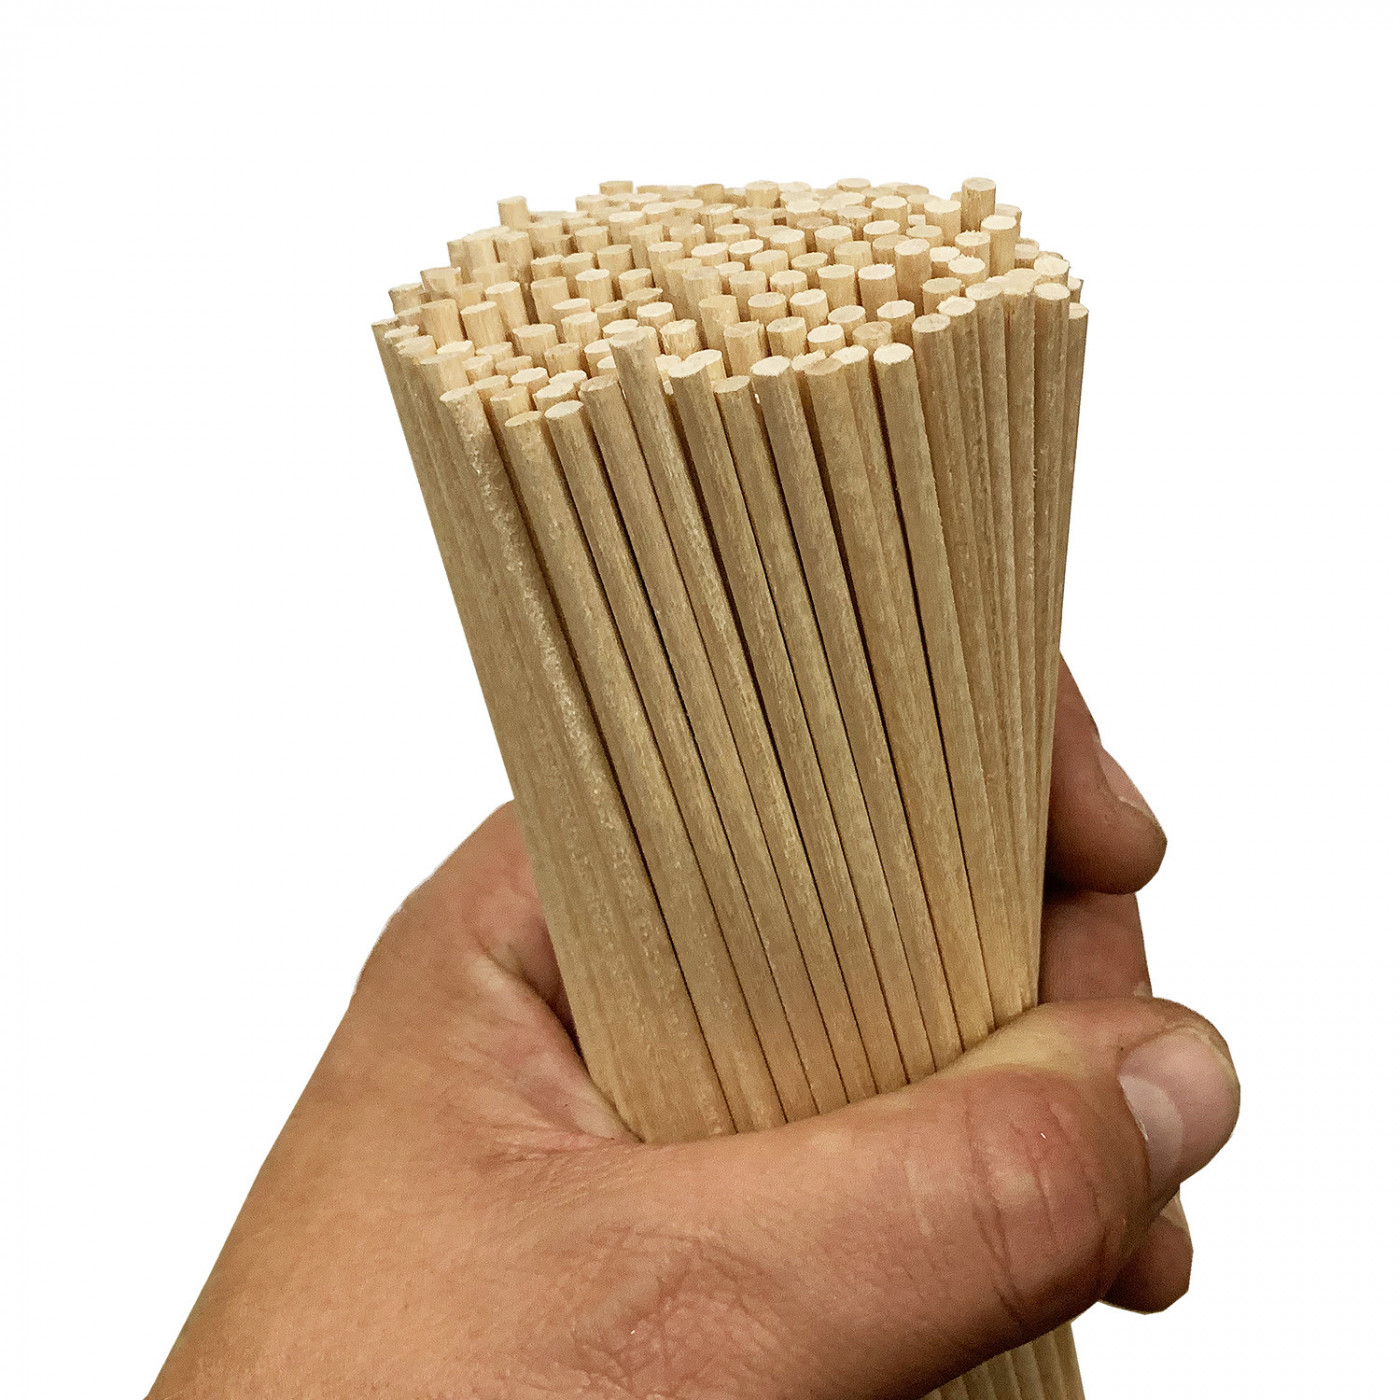 Set of 3000 wooden sticks (2.5 mm x 7 cm, pointed)